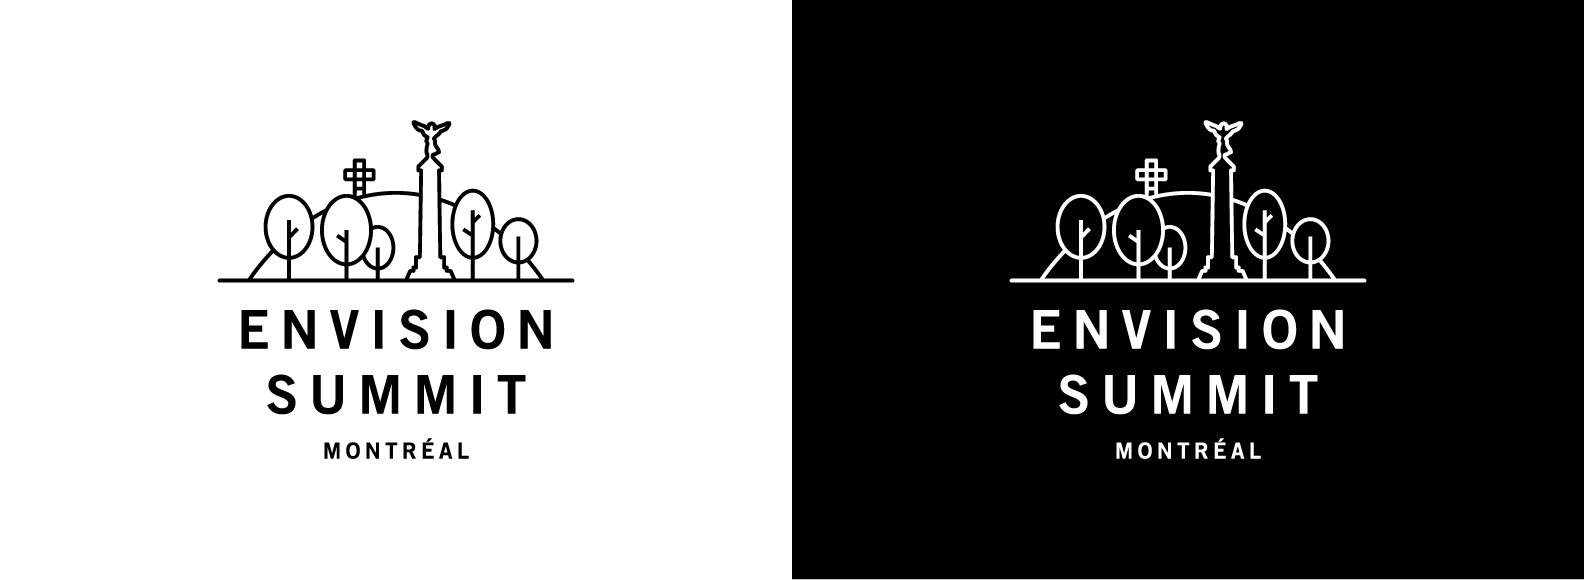 Envision Summit Montreal Logo design